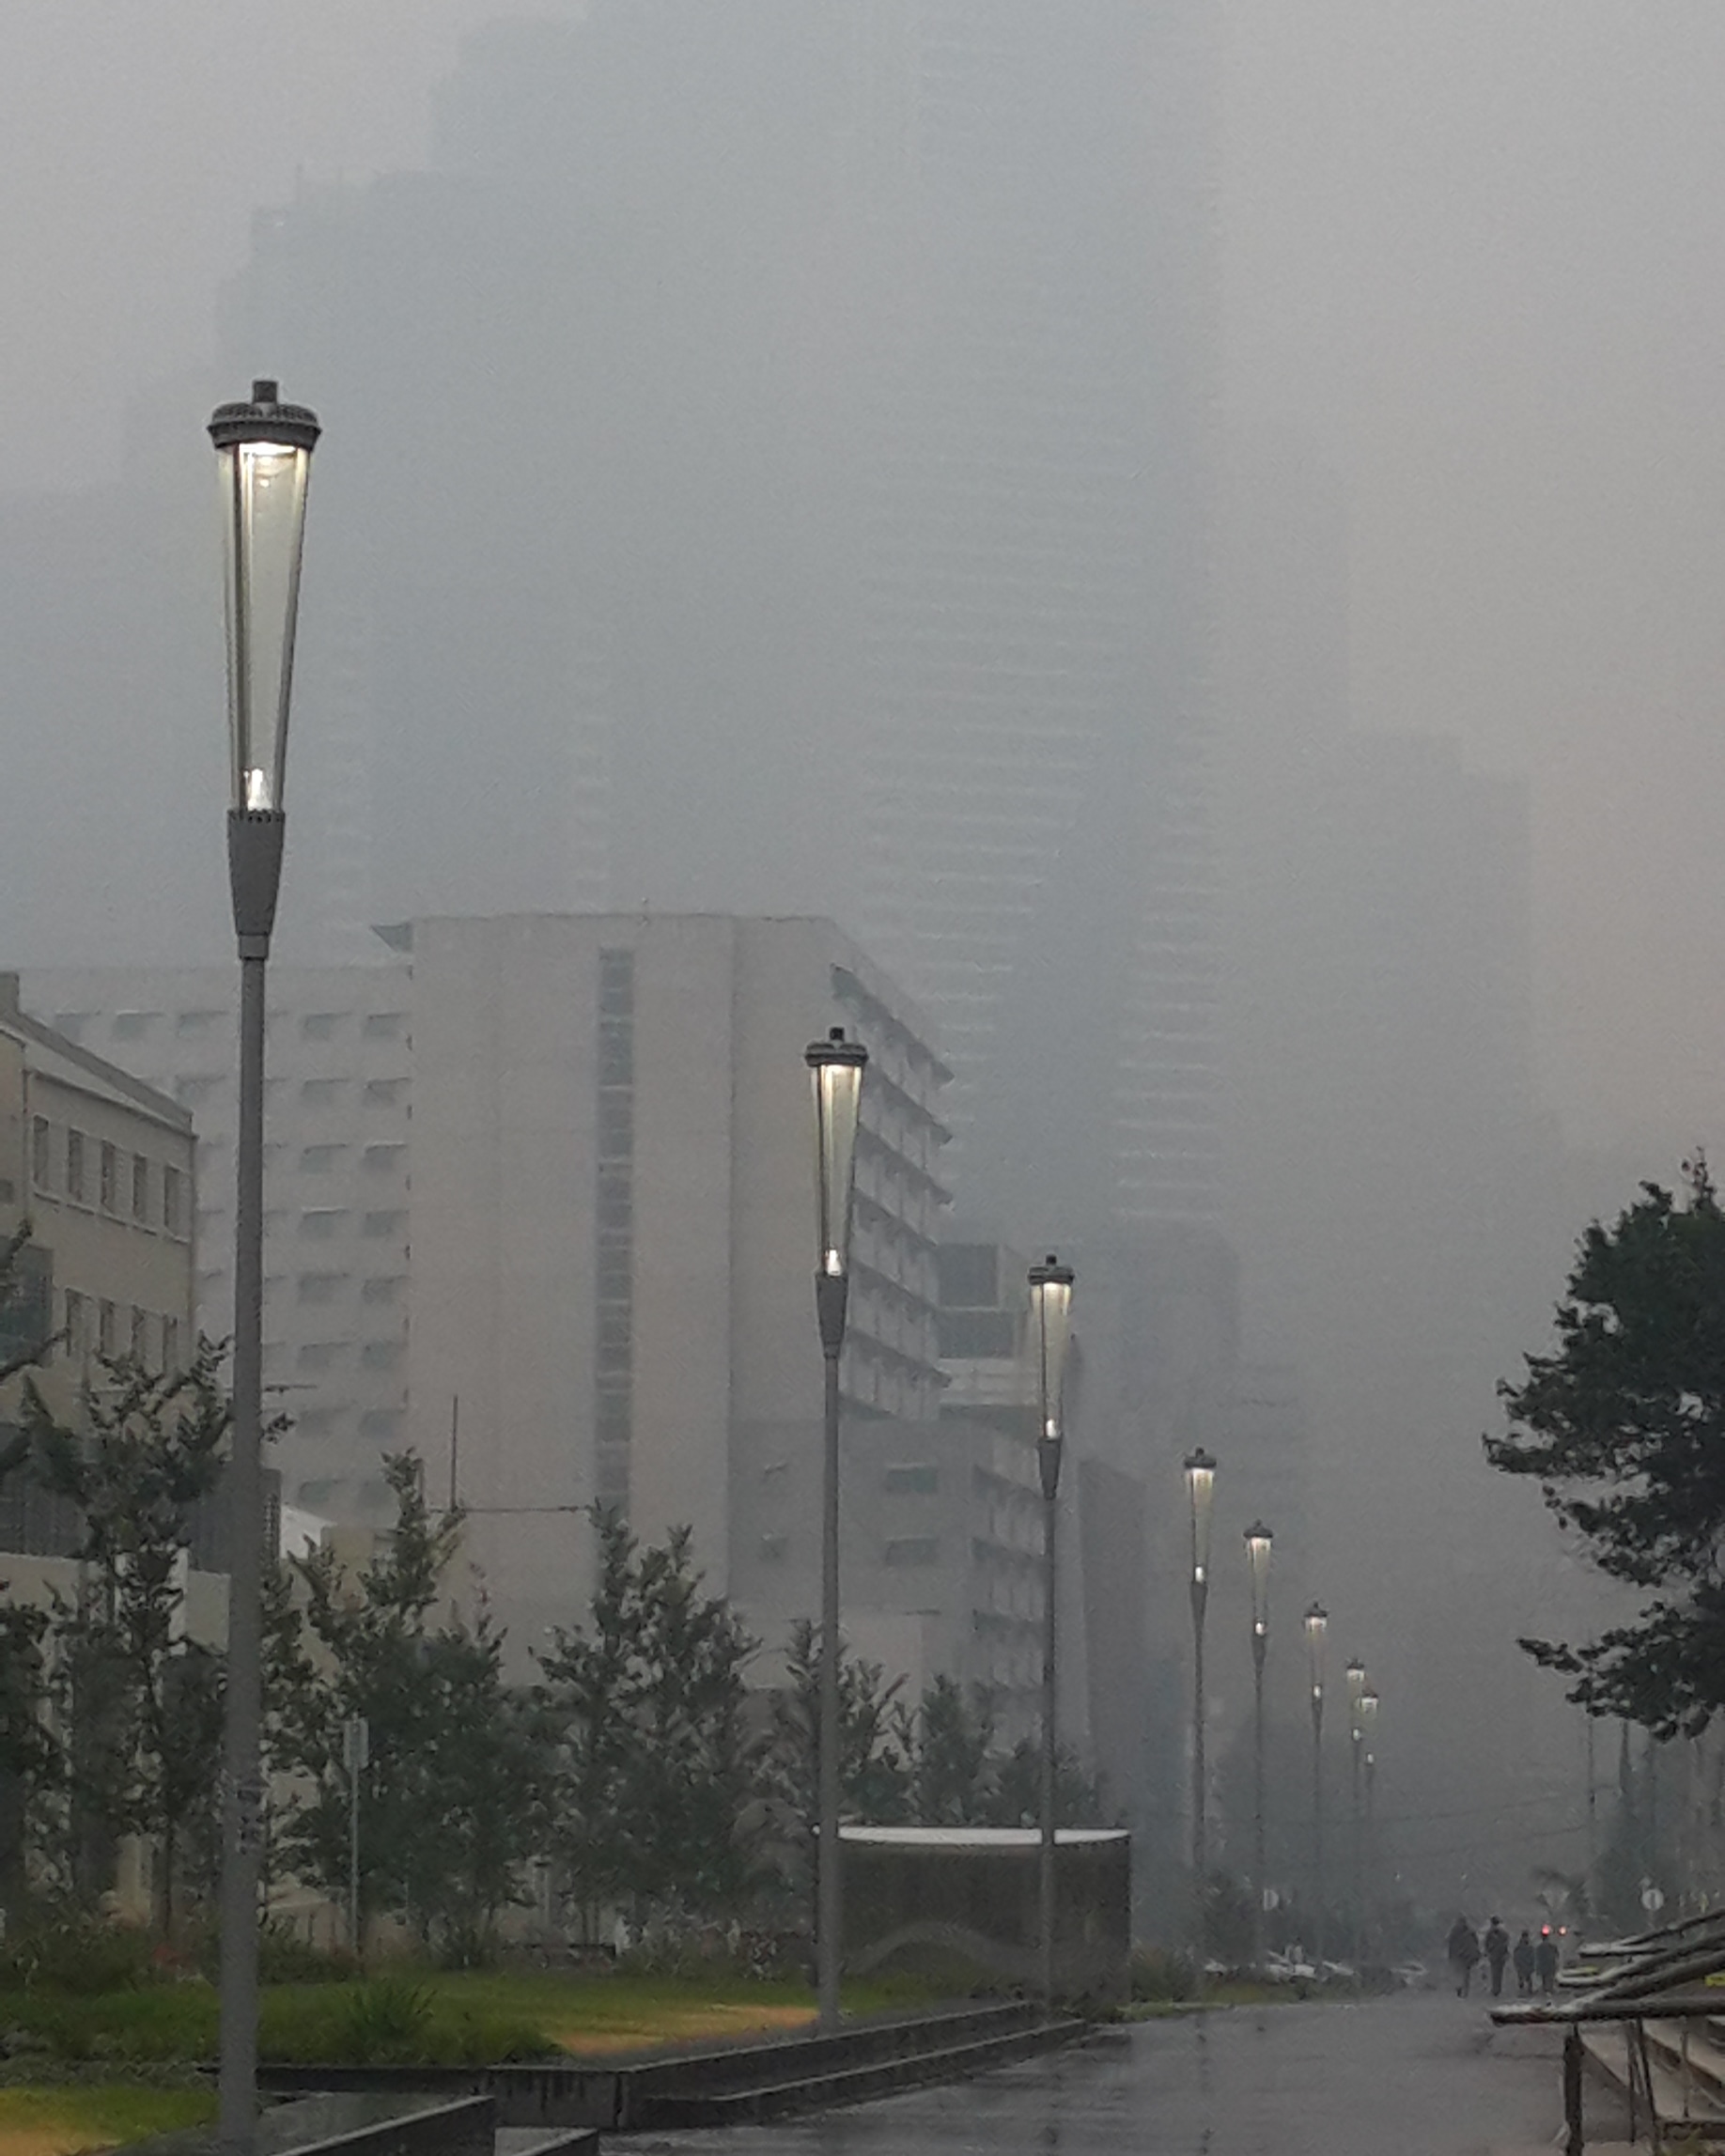 Melbourne shrouded in smoke from bushfires